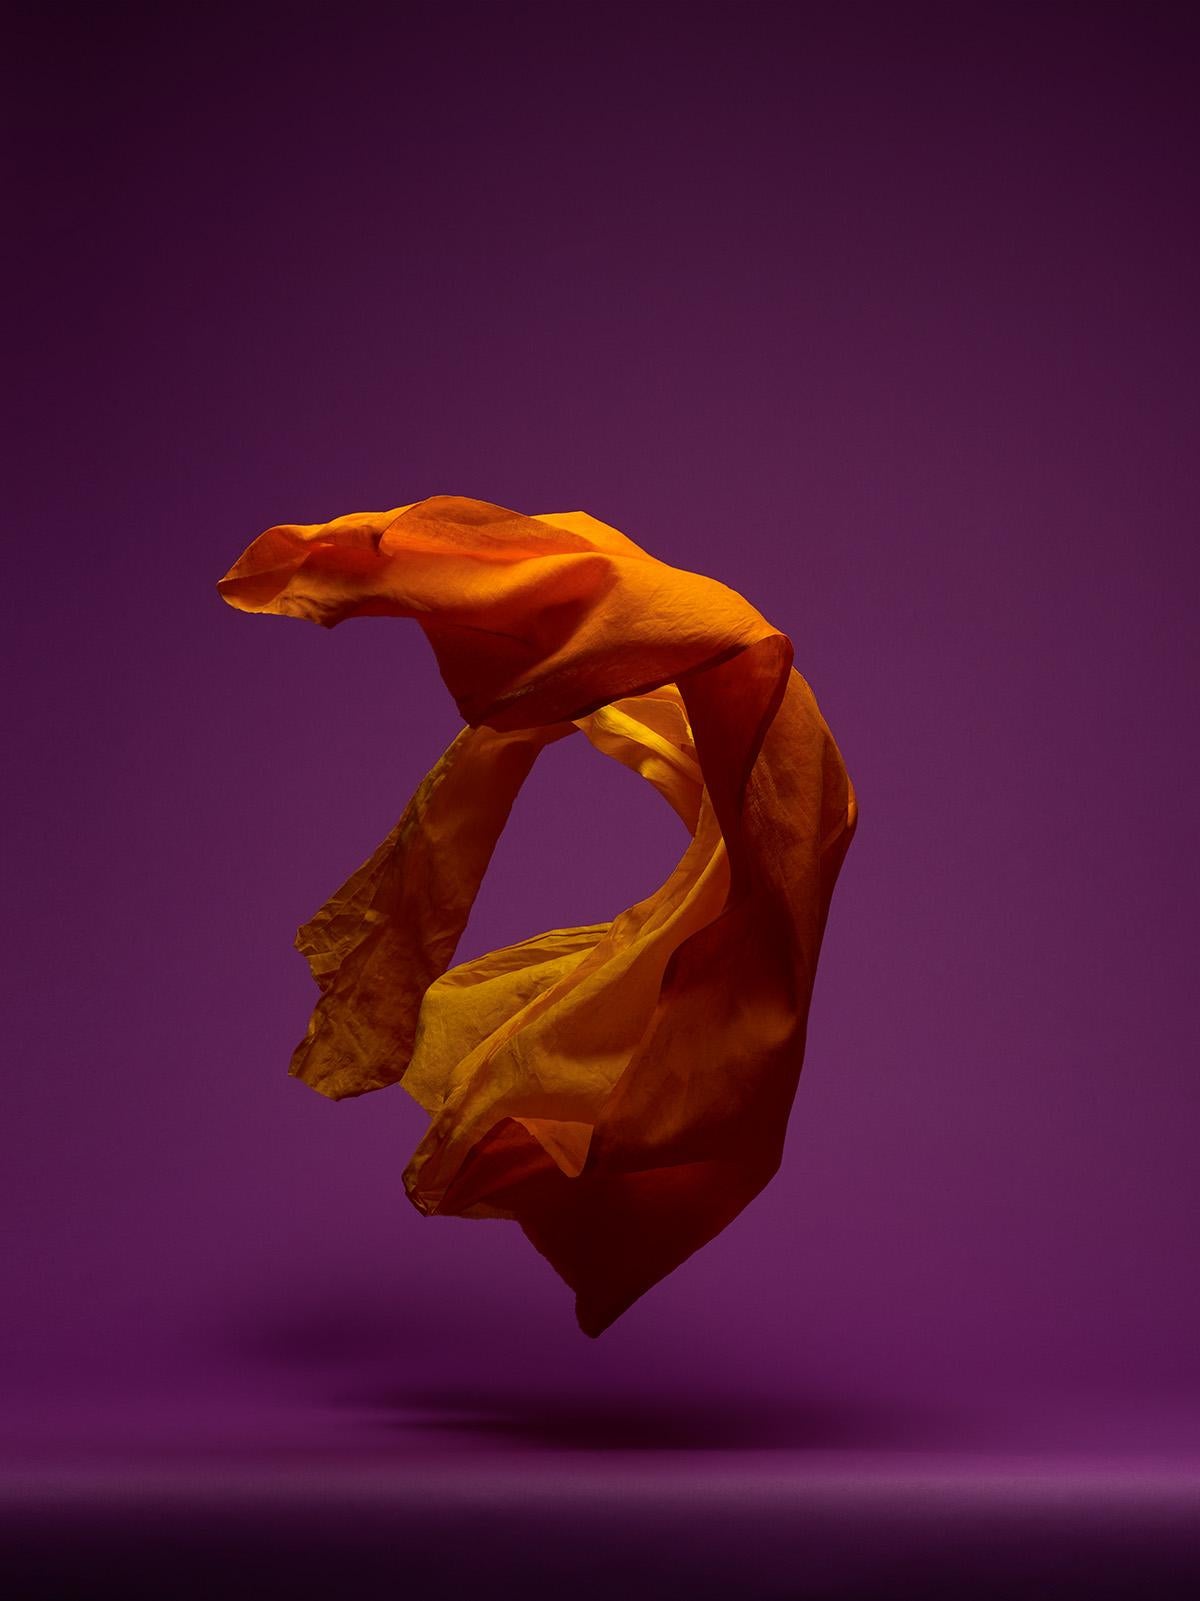 Neal Grundy Color Photograph - Dancing Fabric, Orange on Purple